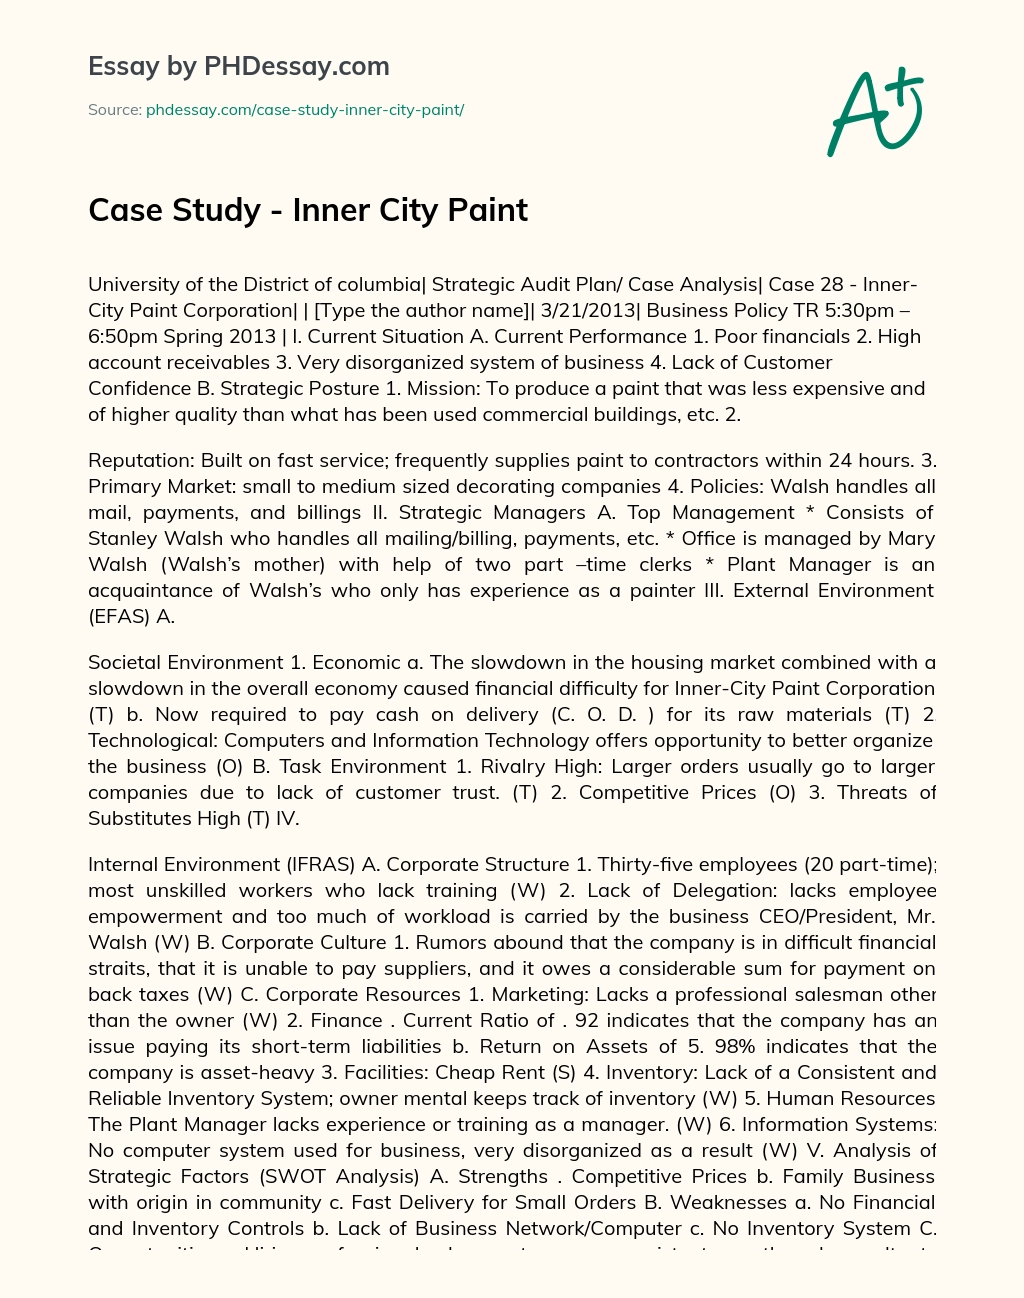 Case Study – Inner City Paint essay